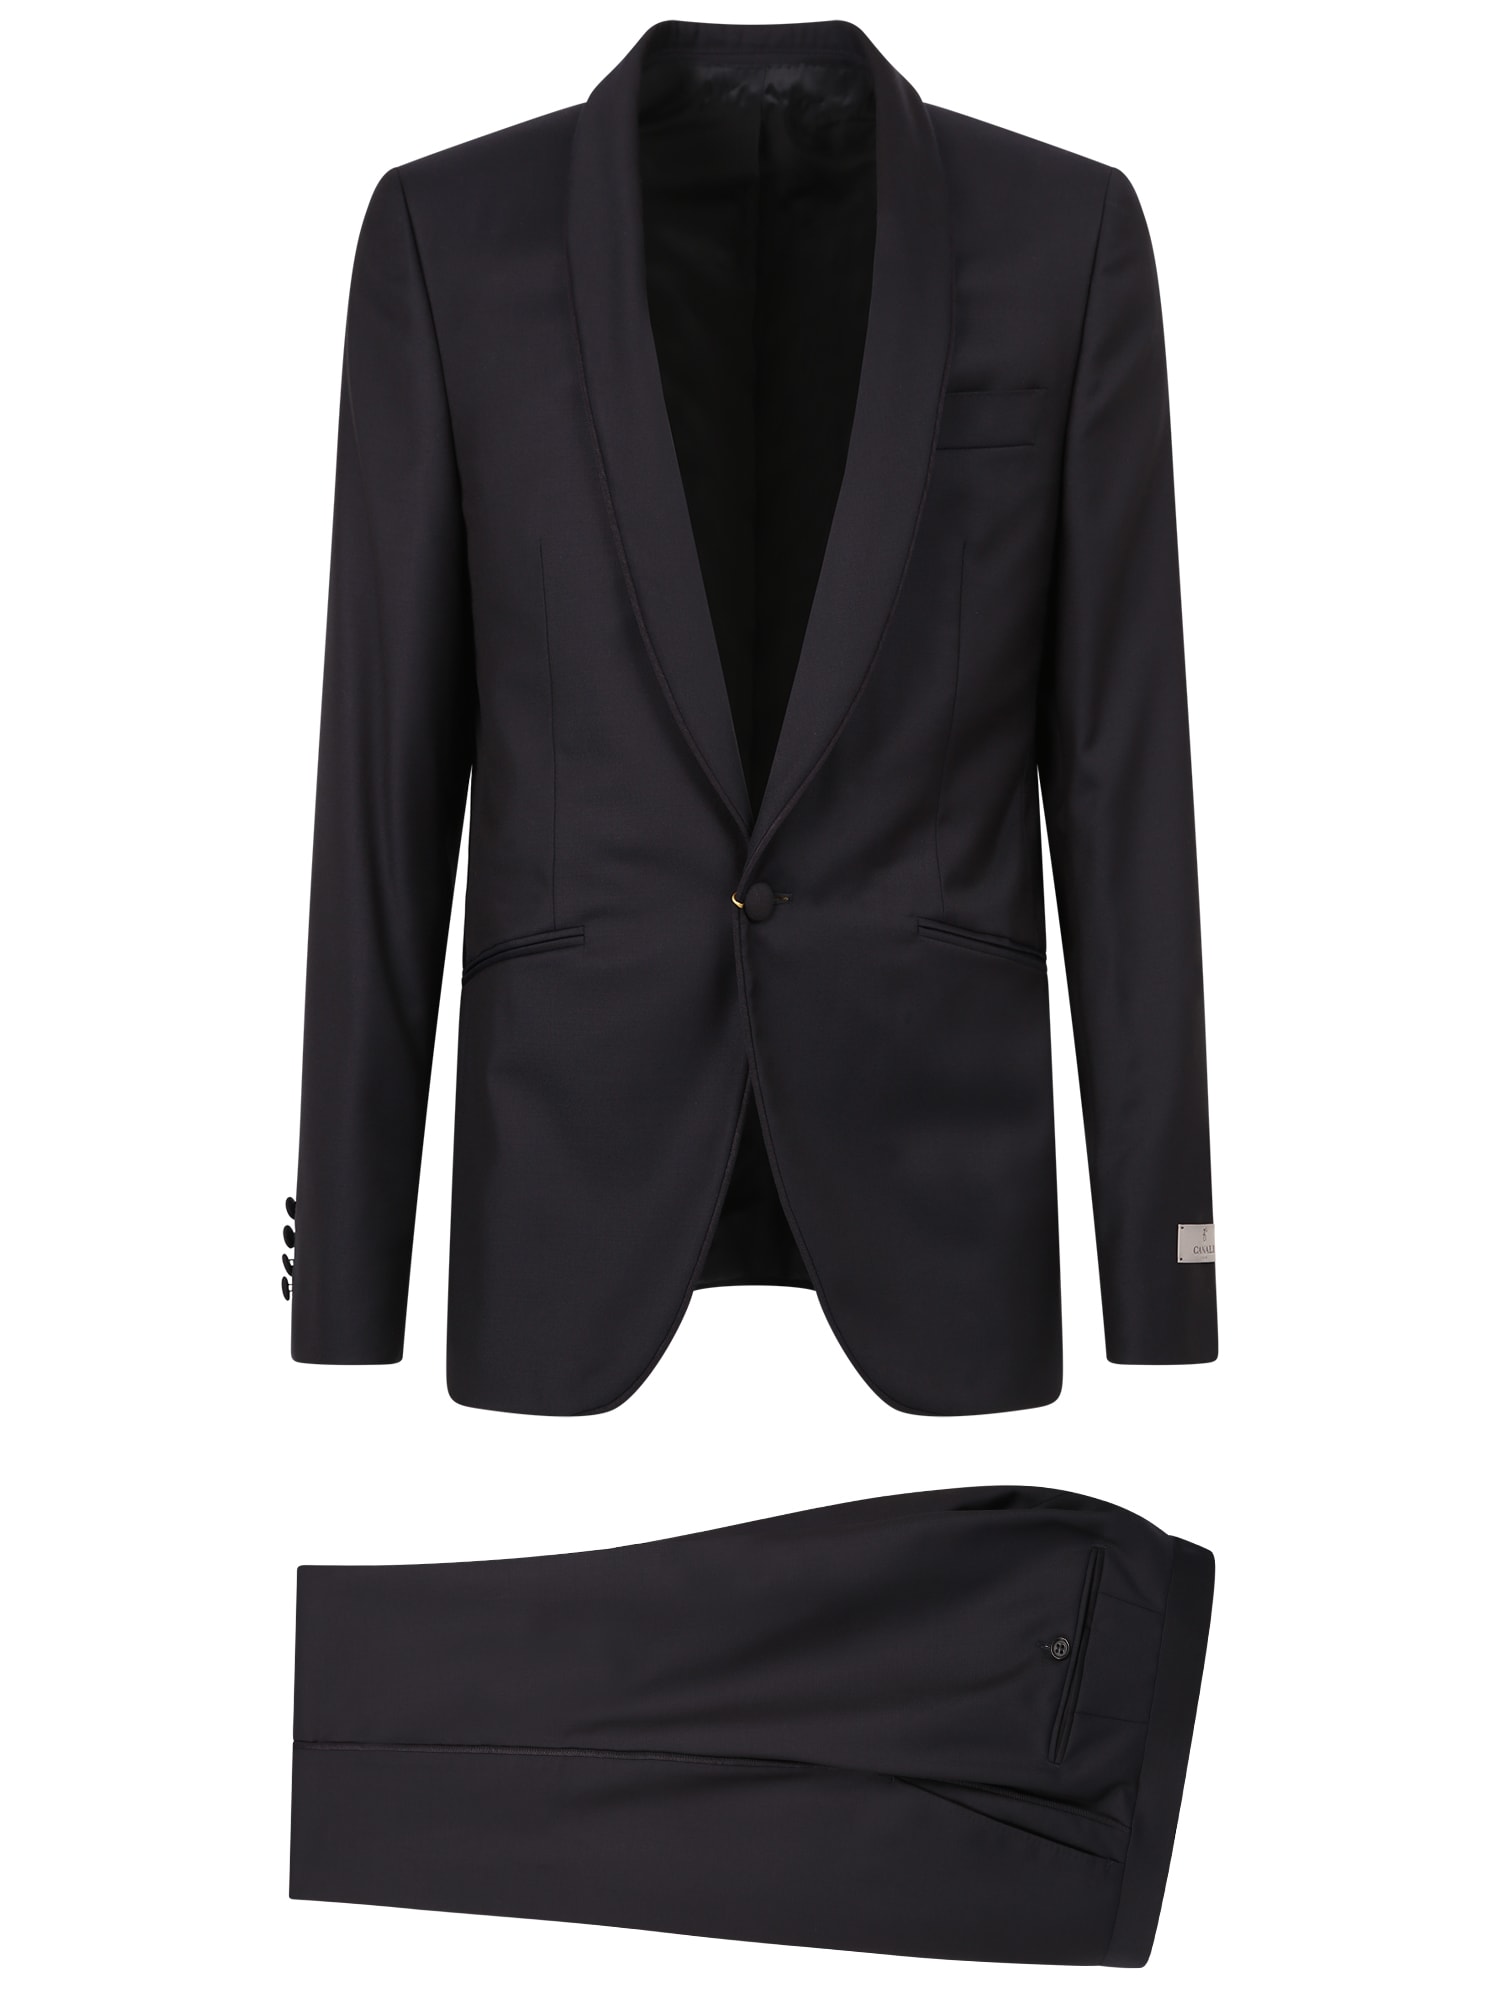 Canali Tuxedo Suit